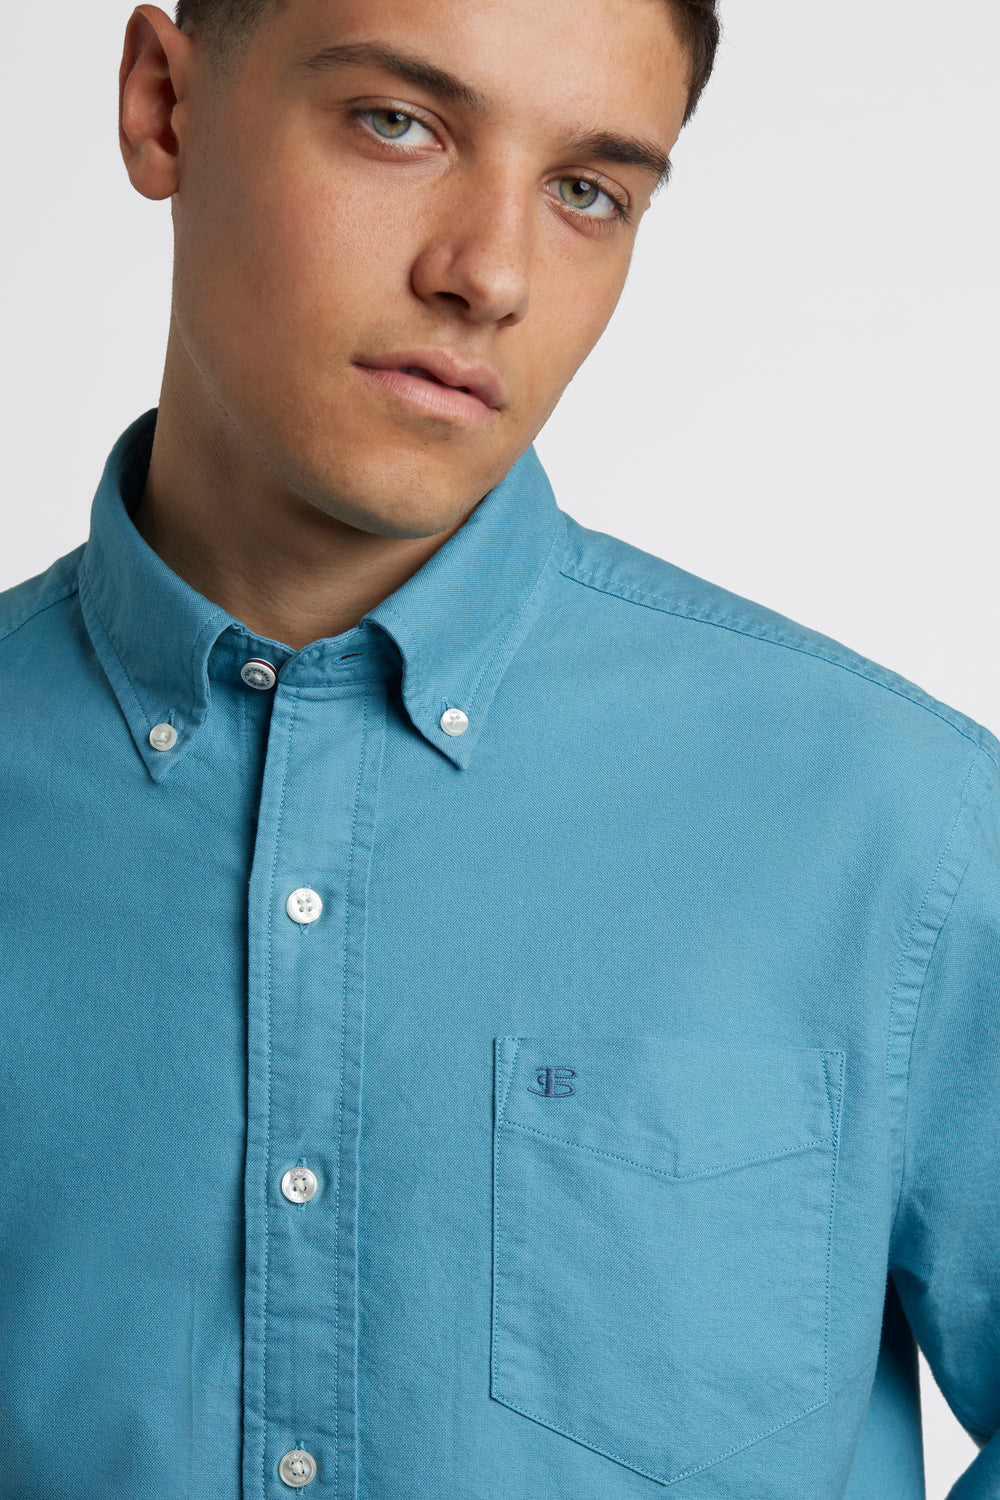 Beatnik Oxford Garment Dye Shirt - Deep Teal Blue - Ben Sherman